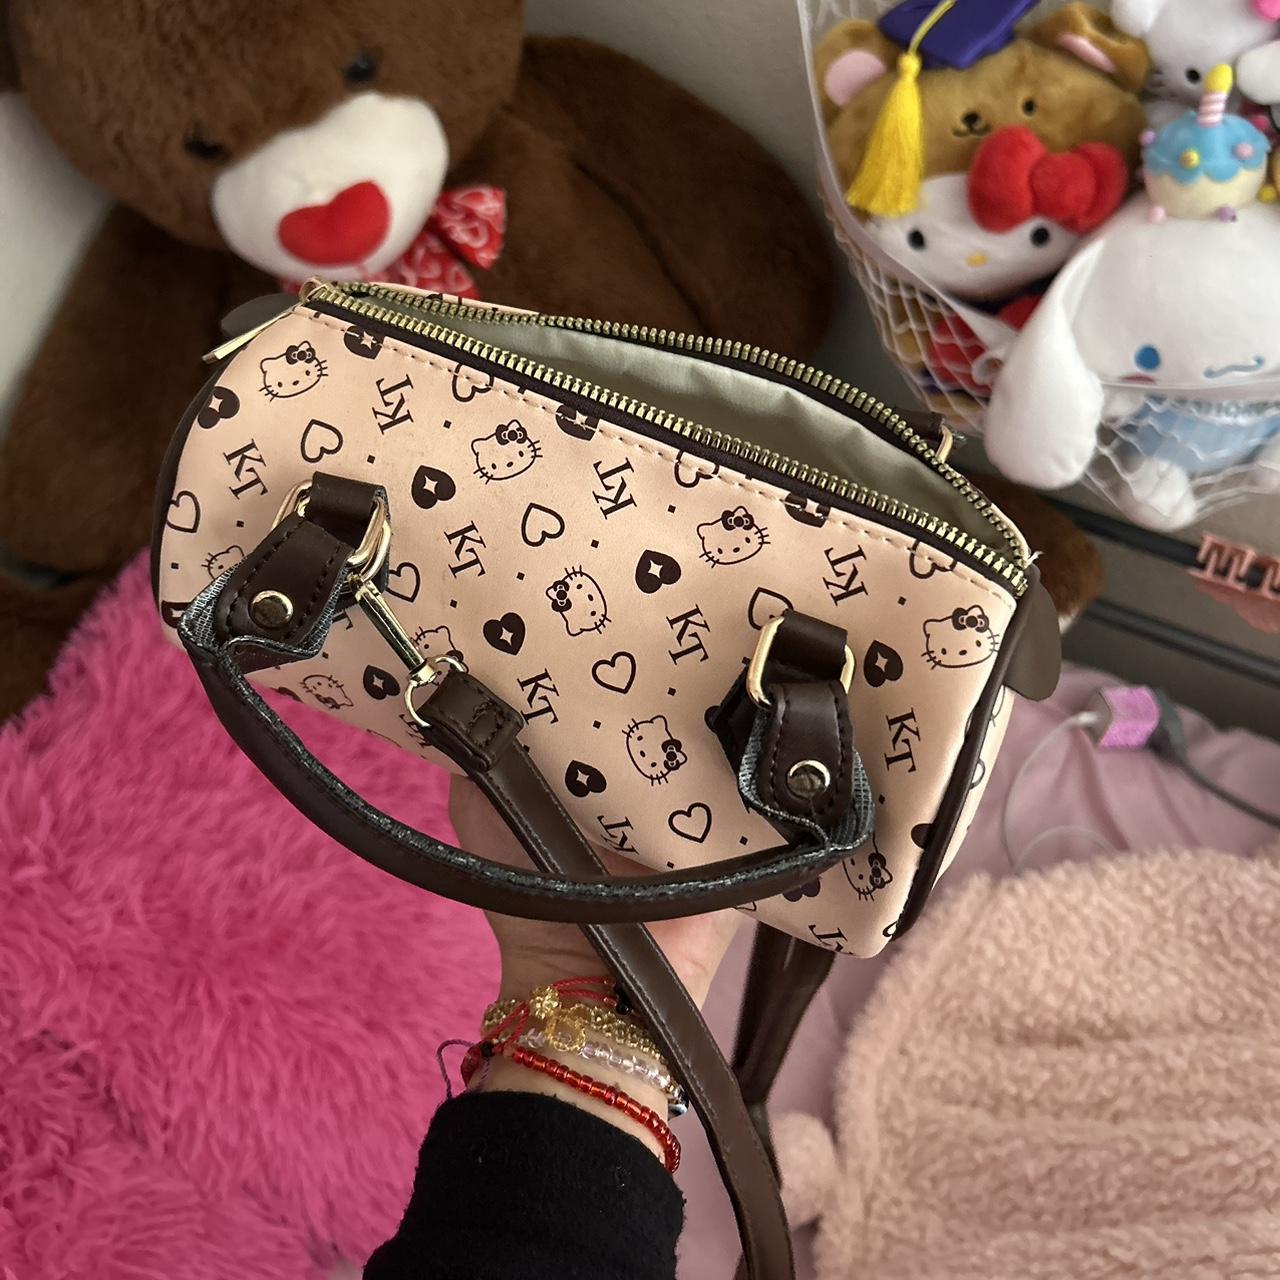 Hello kitty loungefly backpack Metallic hot pink - Depop